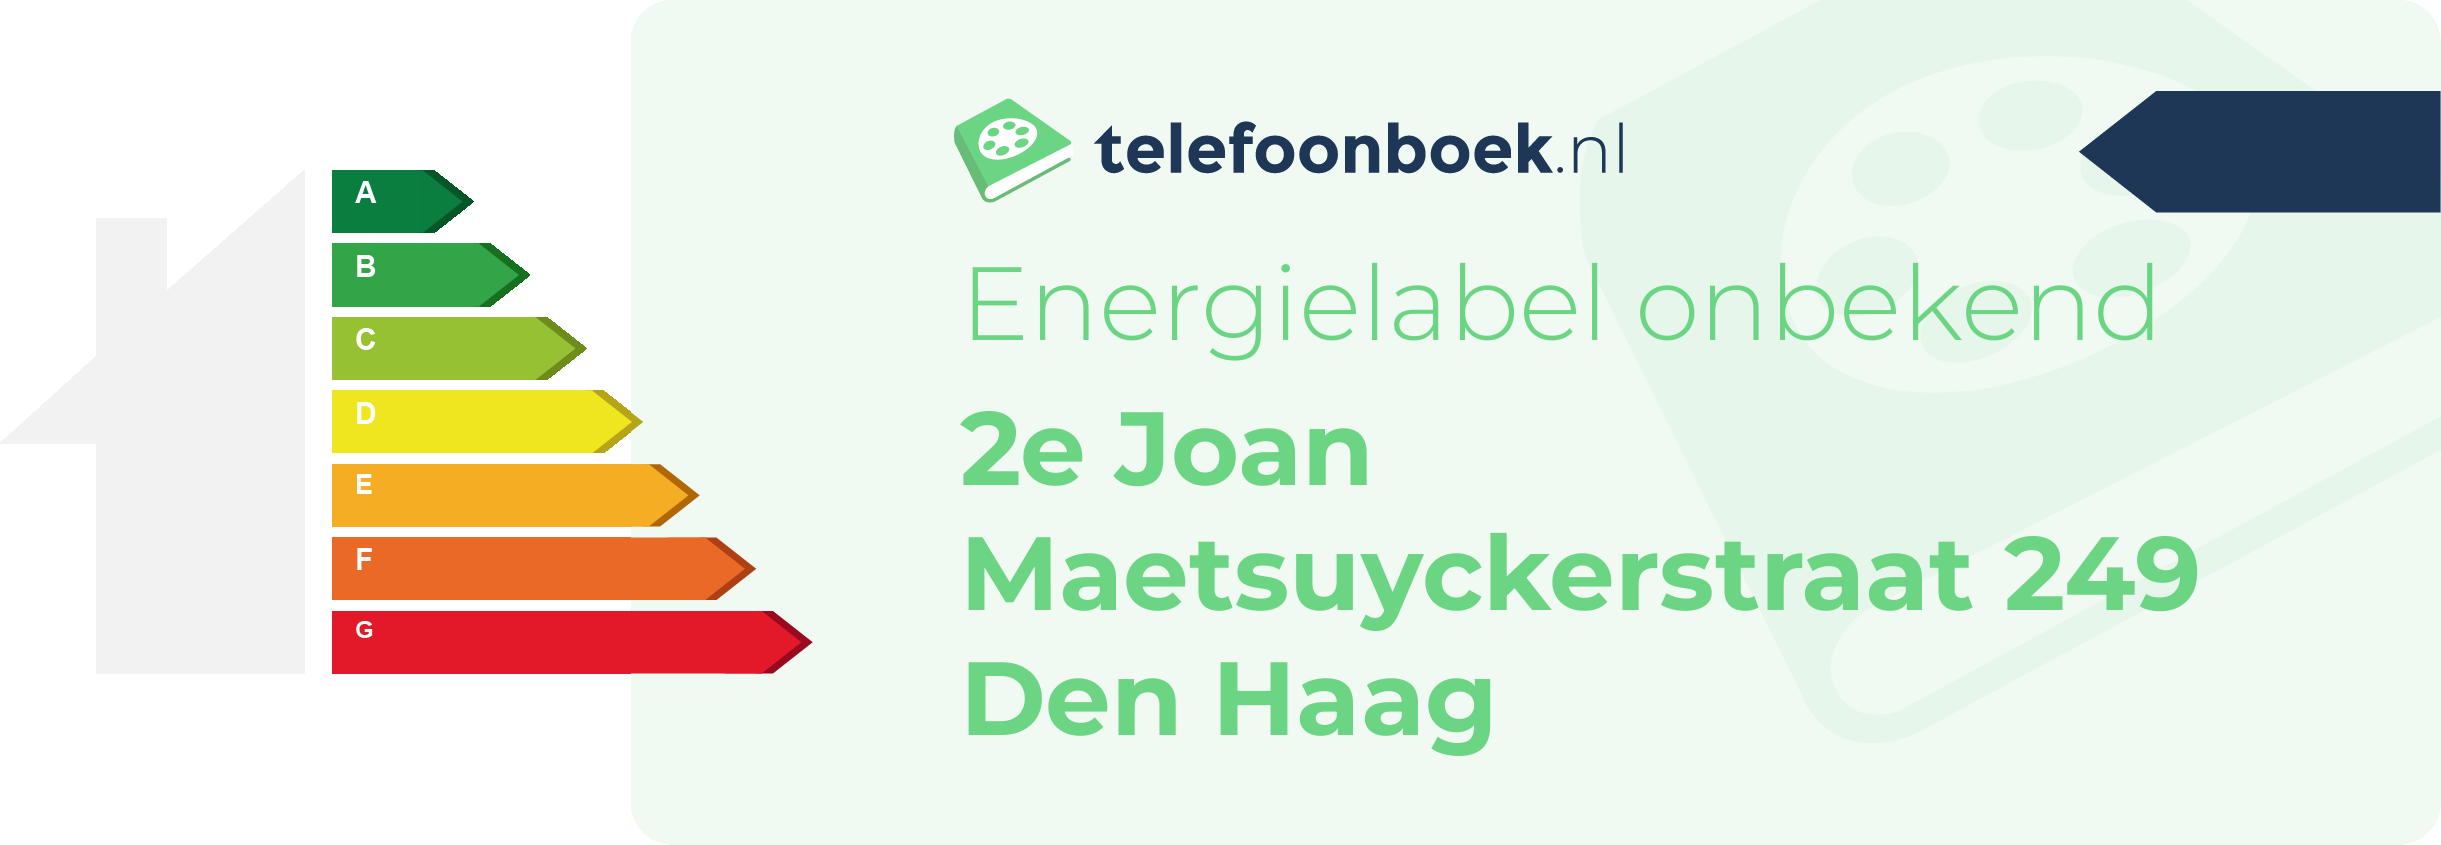 Energielabel 2e Joan Maetsuyckerstraat 249 Den Haag